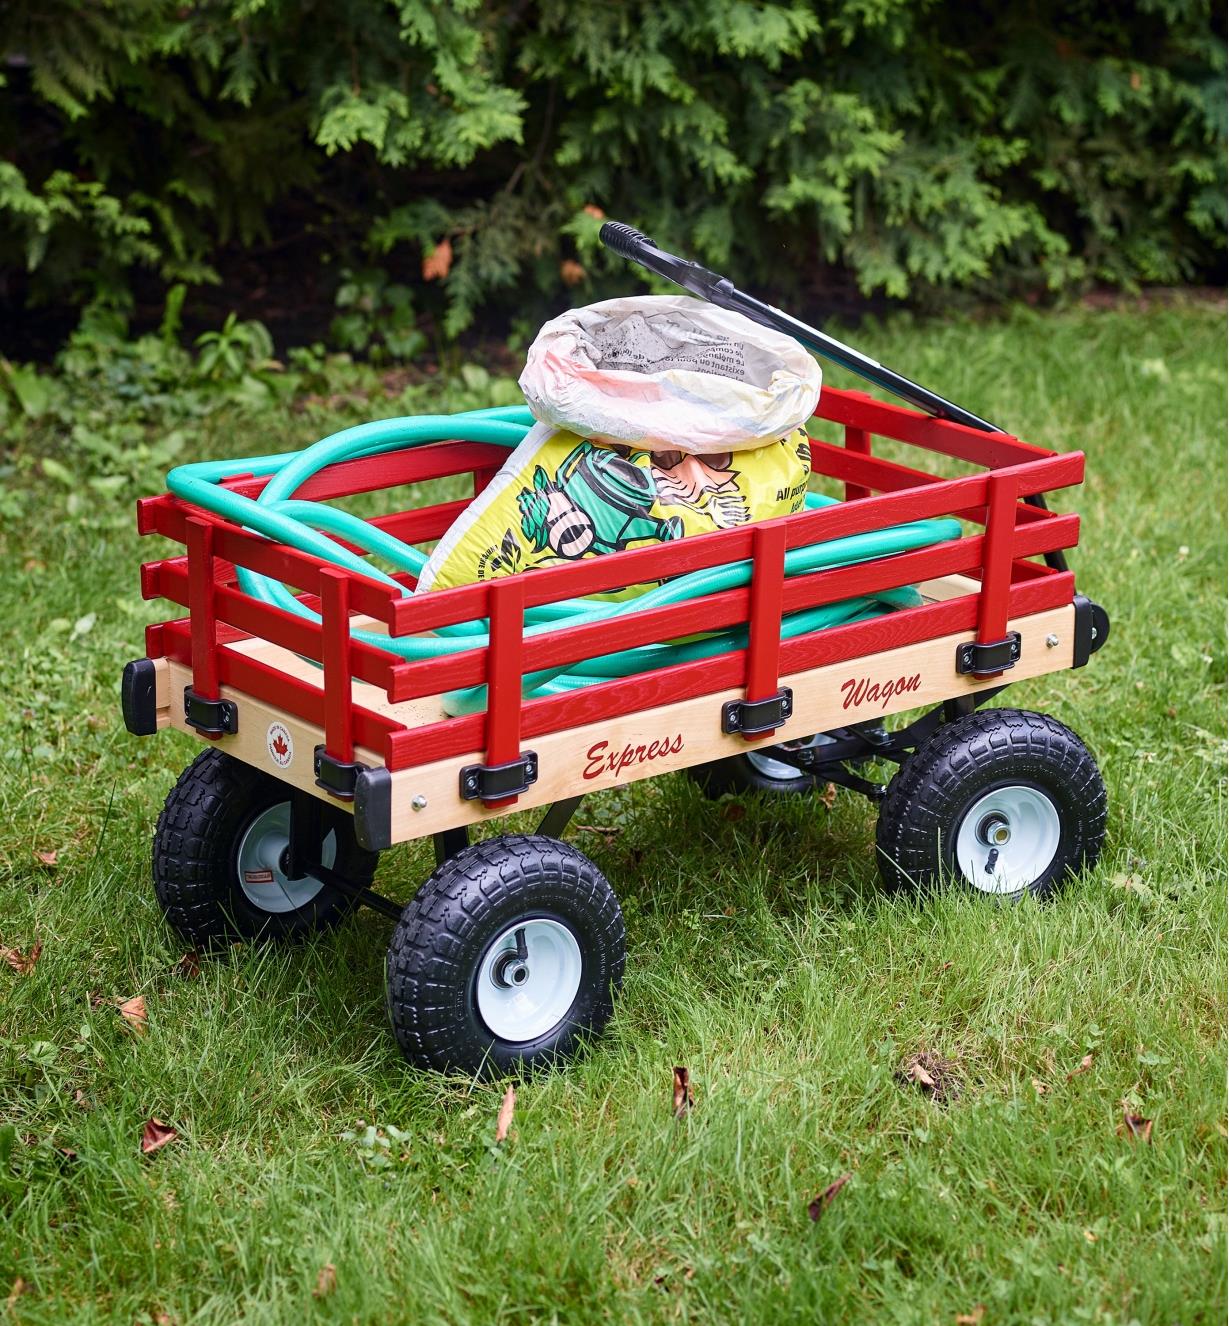 A wagon in a yard carrying gardening supplies